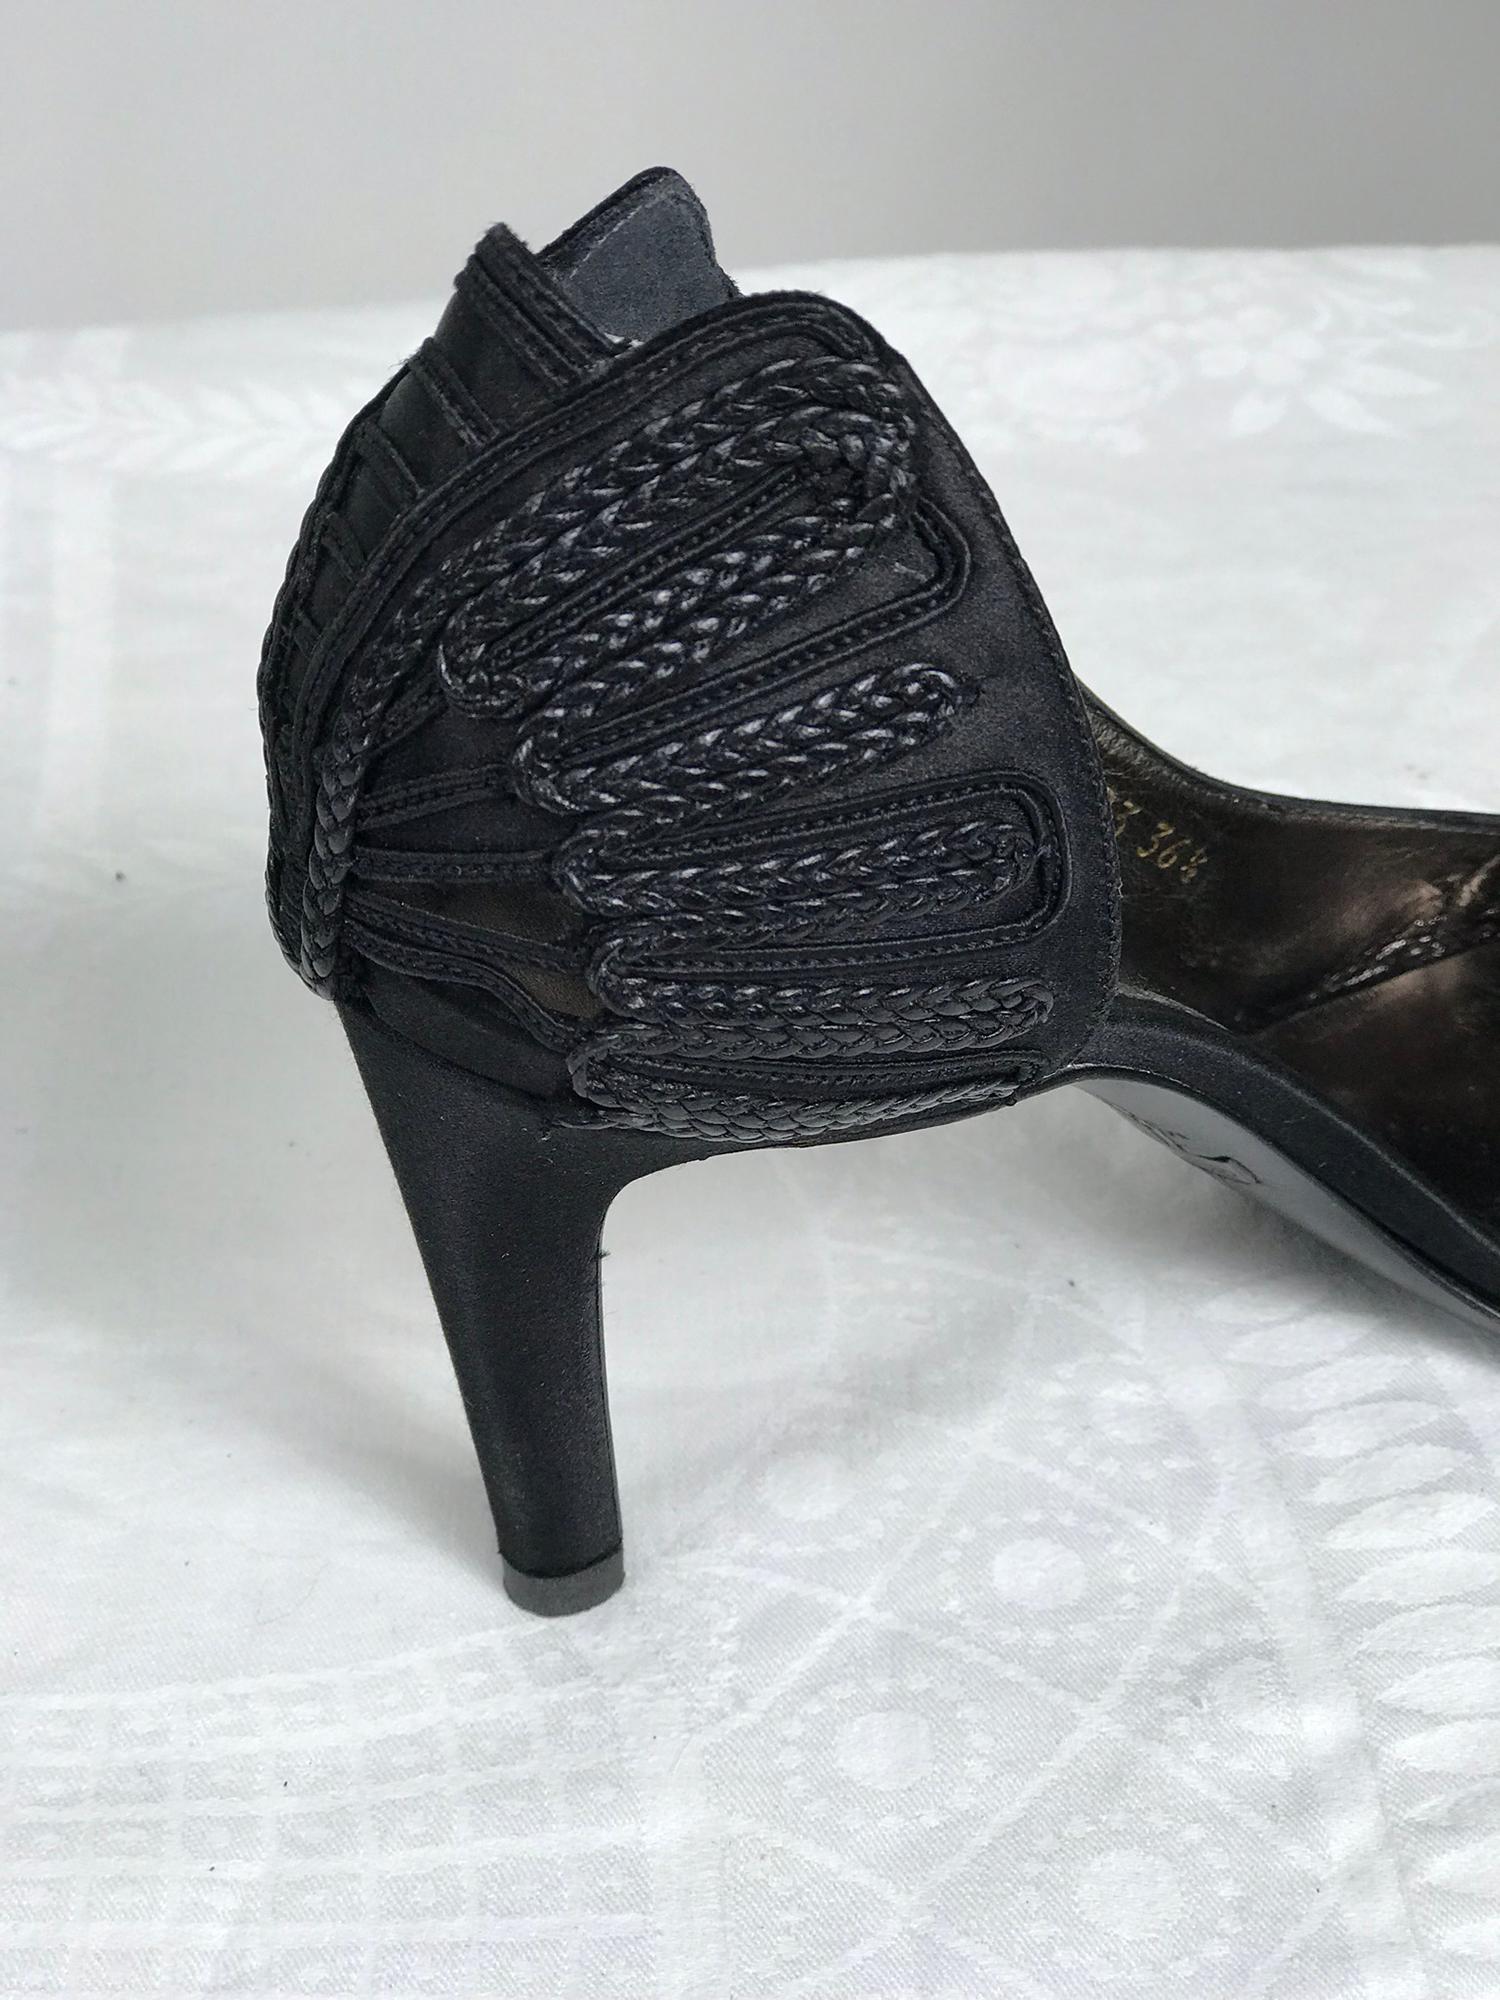 armani black high heels